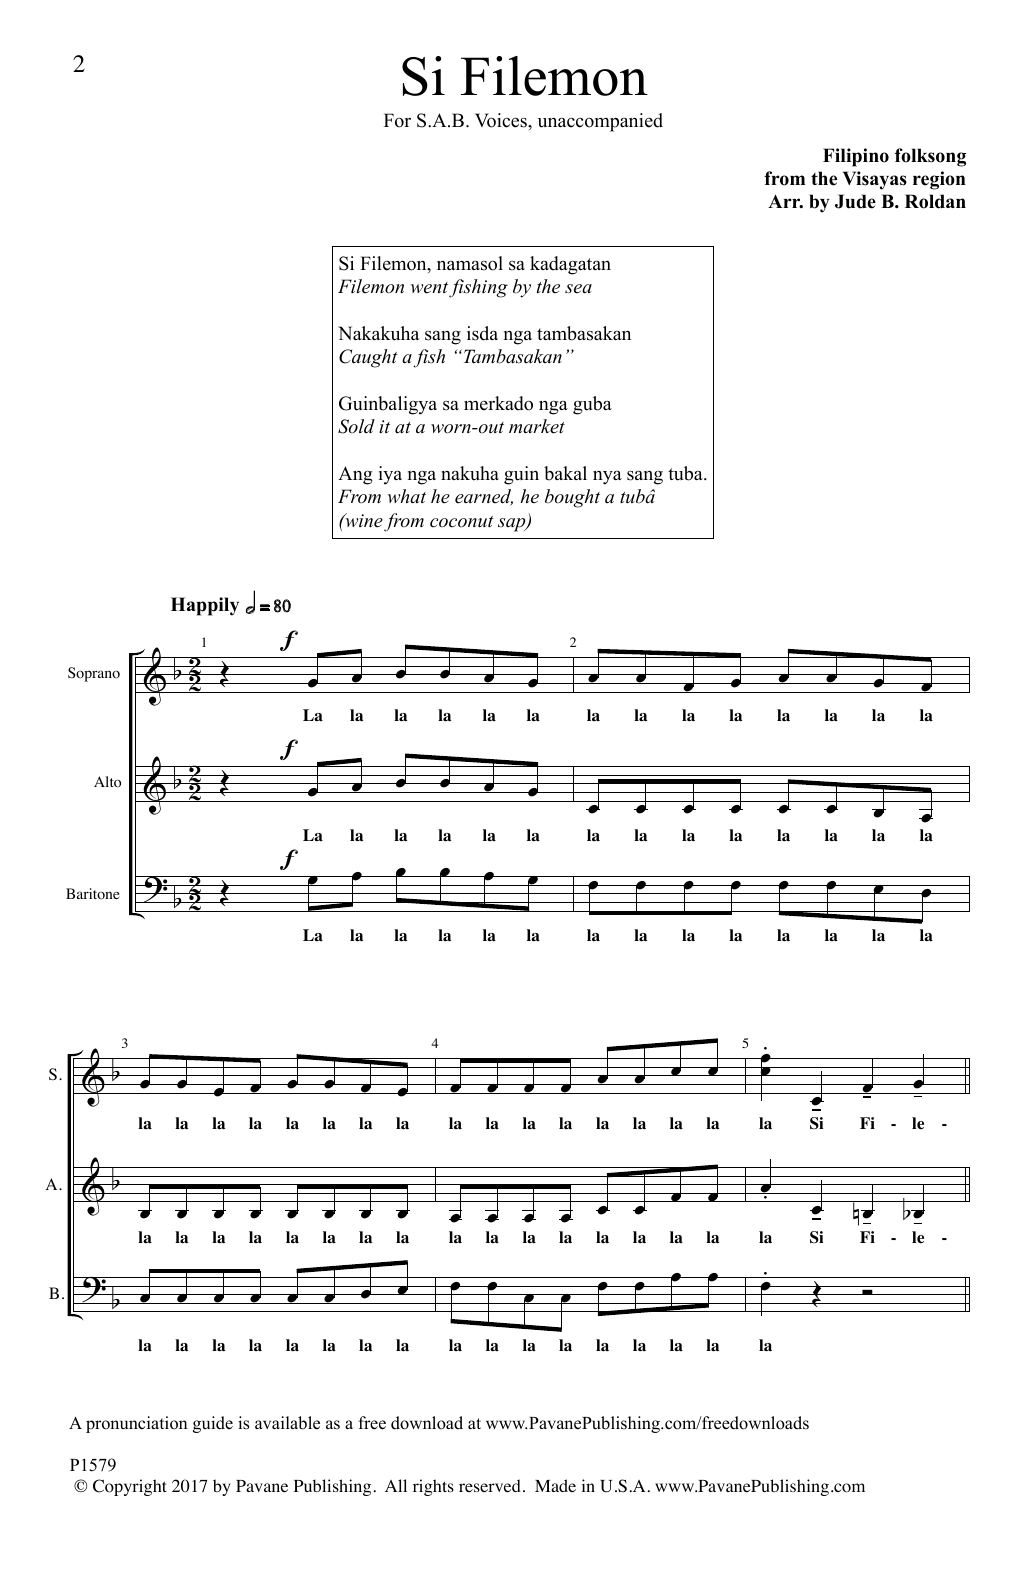 Download Jude B. Roldan Si Filemon Sheet Music and learn how to play SAB Choir PDF digital score in minutes